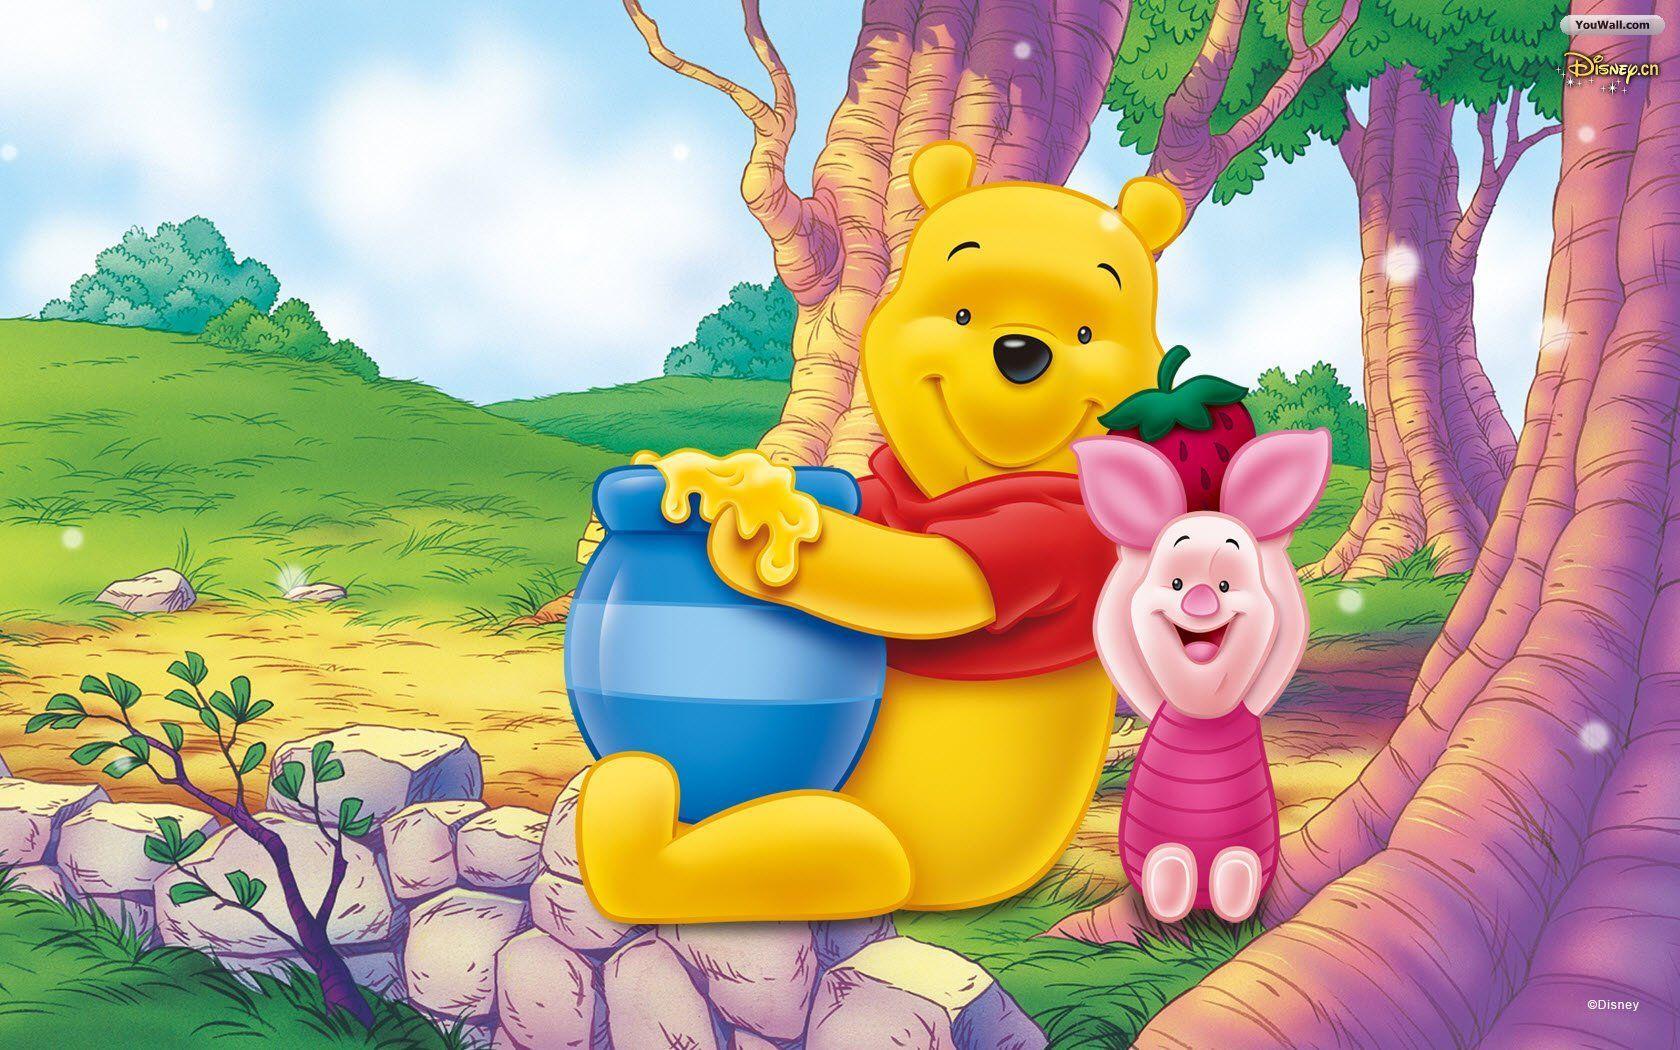 Free Winnie the Pooh Wallpaper. YouWall Pooh Wallpaper